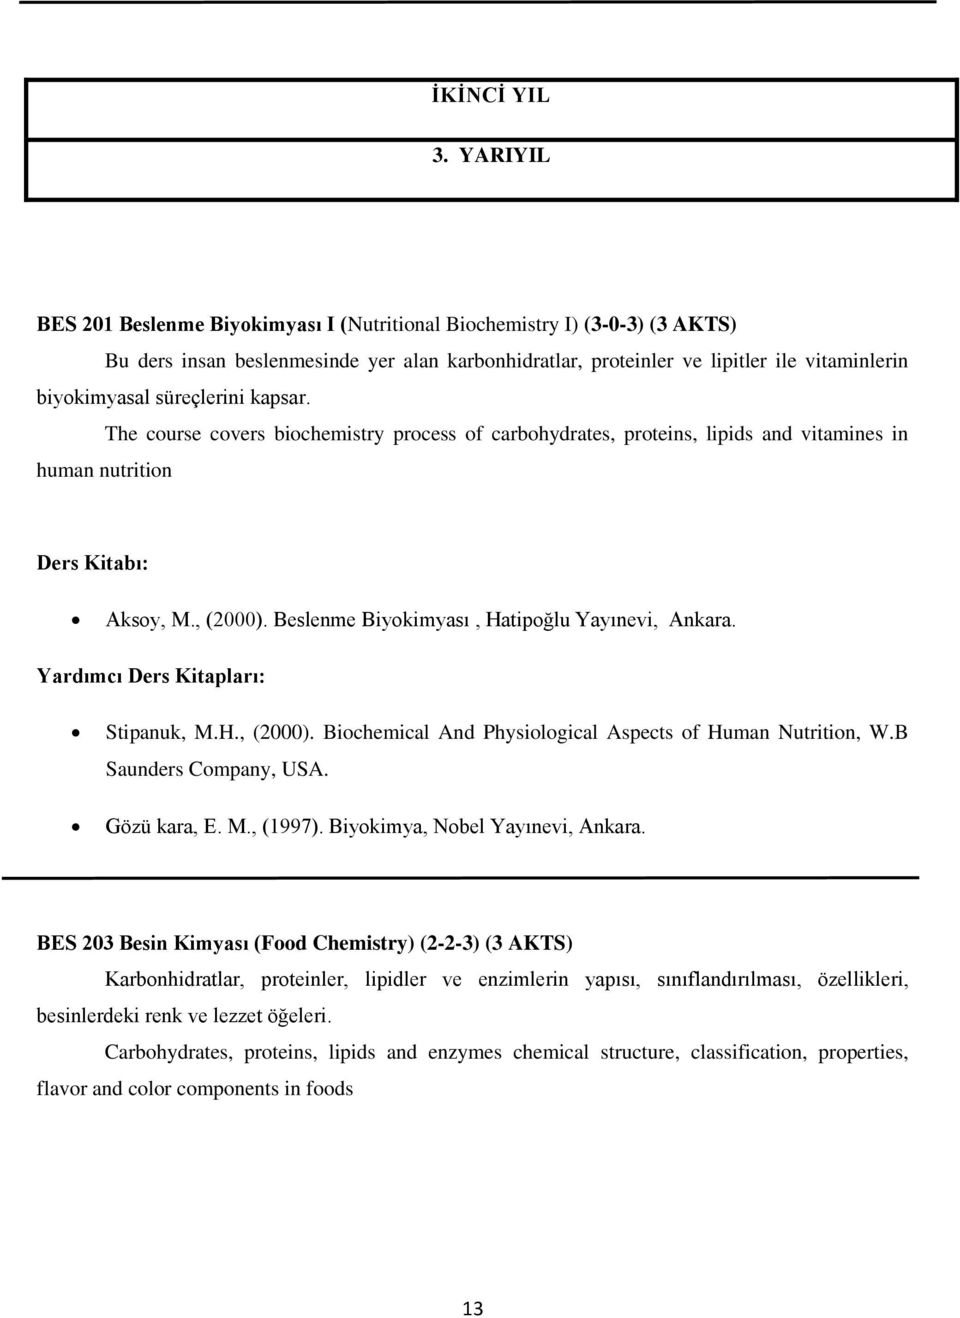 süreçlerini kapsar. The course covers biochemistry process of carbohydrates, proteins, lipids and vitamines in human nutrition Aksoy, M., (2000). Beslenme Biyokimyası, Hatipoğlu Yayınevi, Ankara.